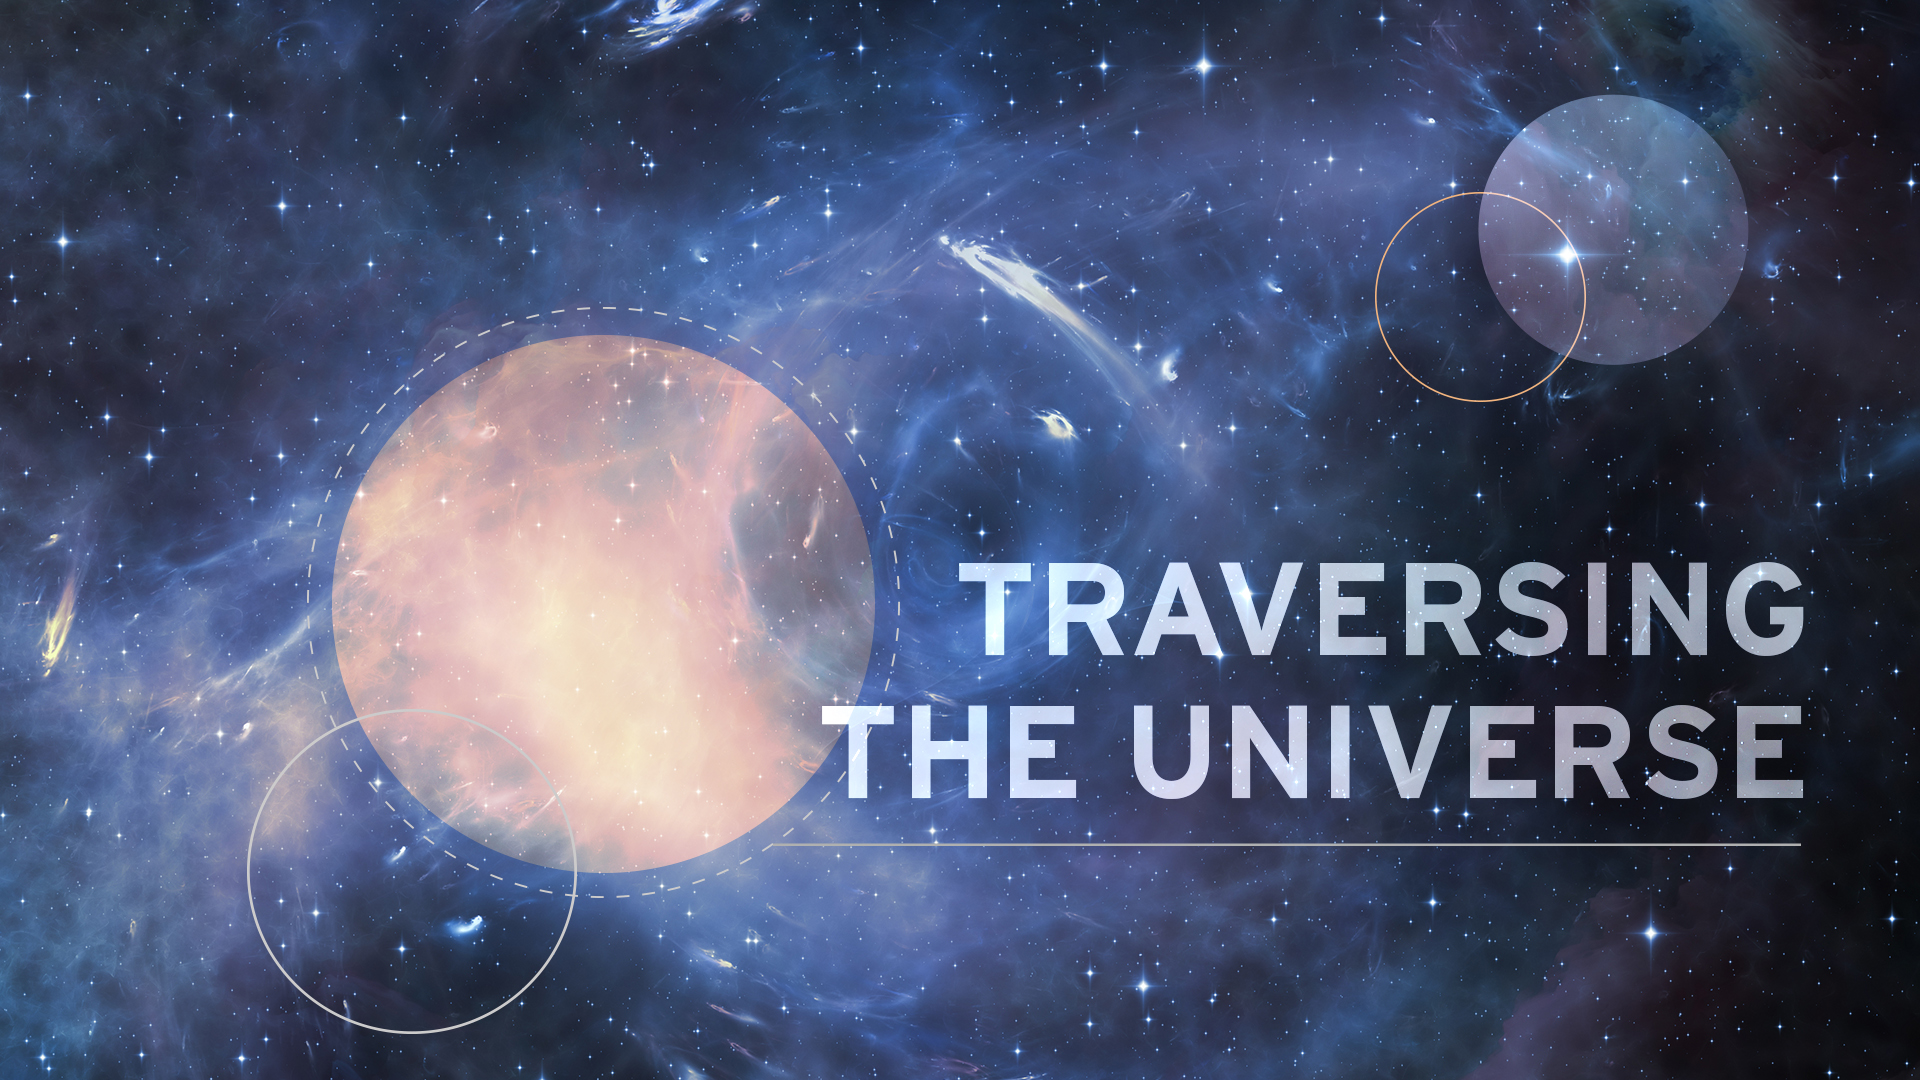  Traversing the Universe